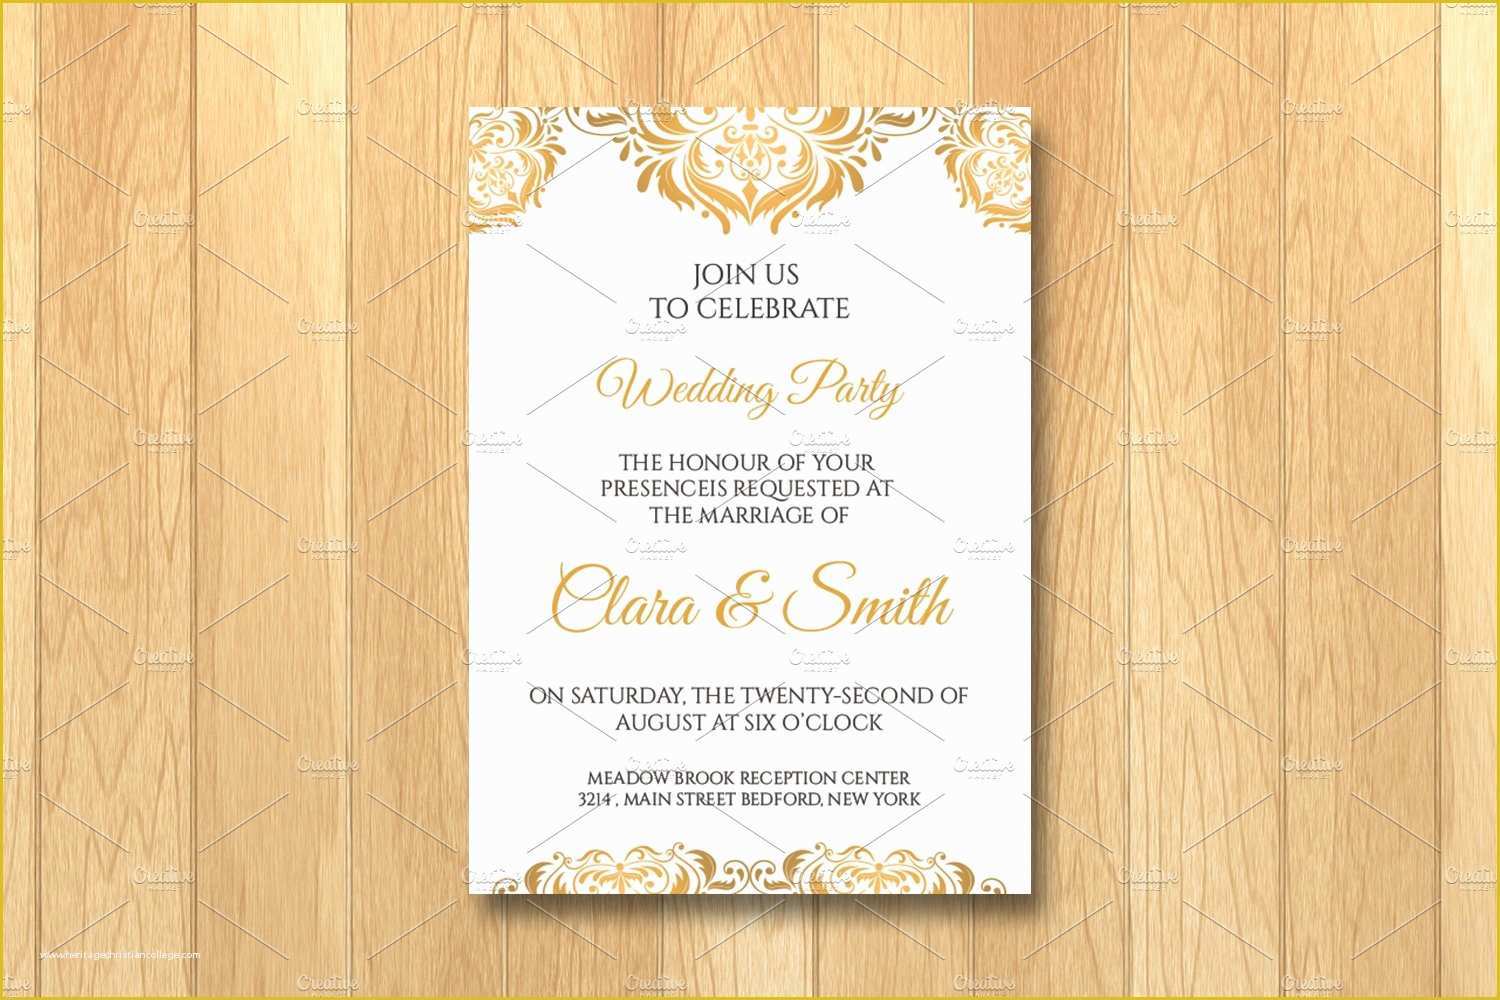 Invitation Card Template Free Of Wedding Invitation Card Template Invitation Templates